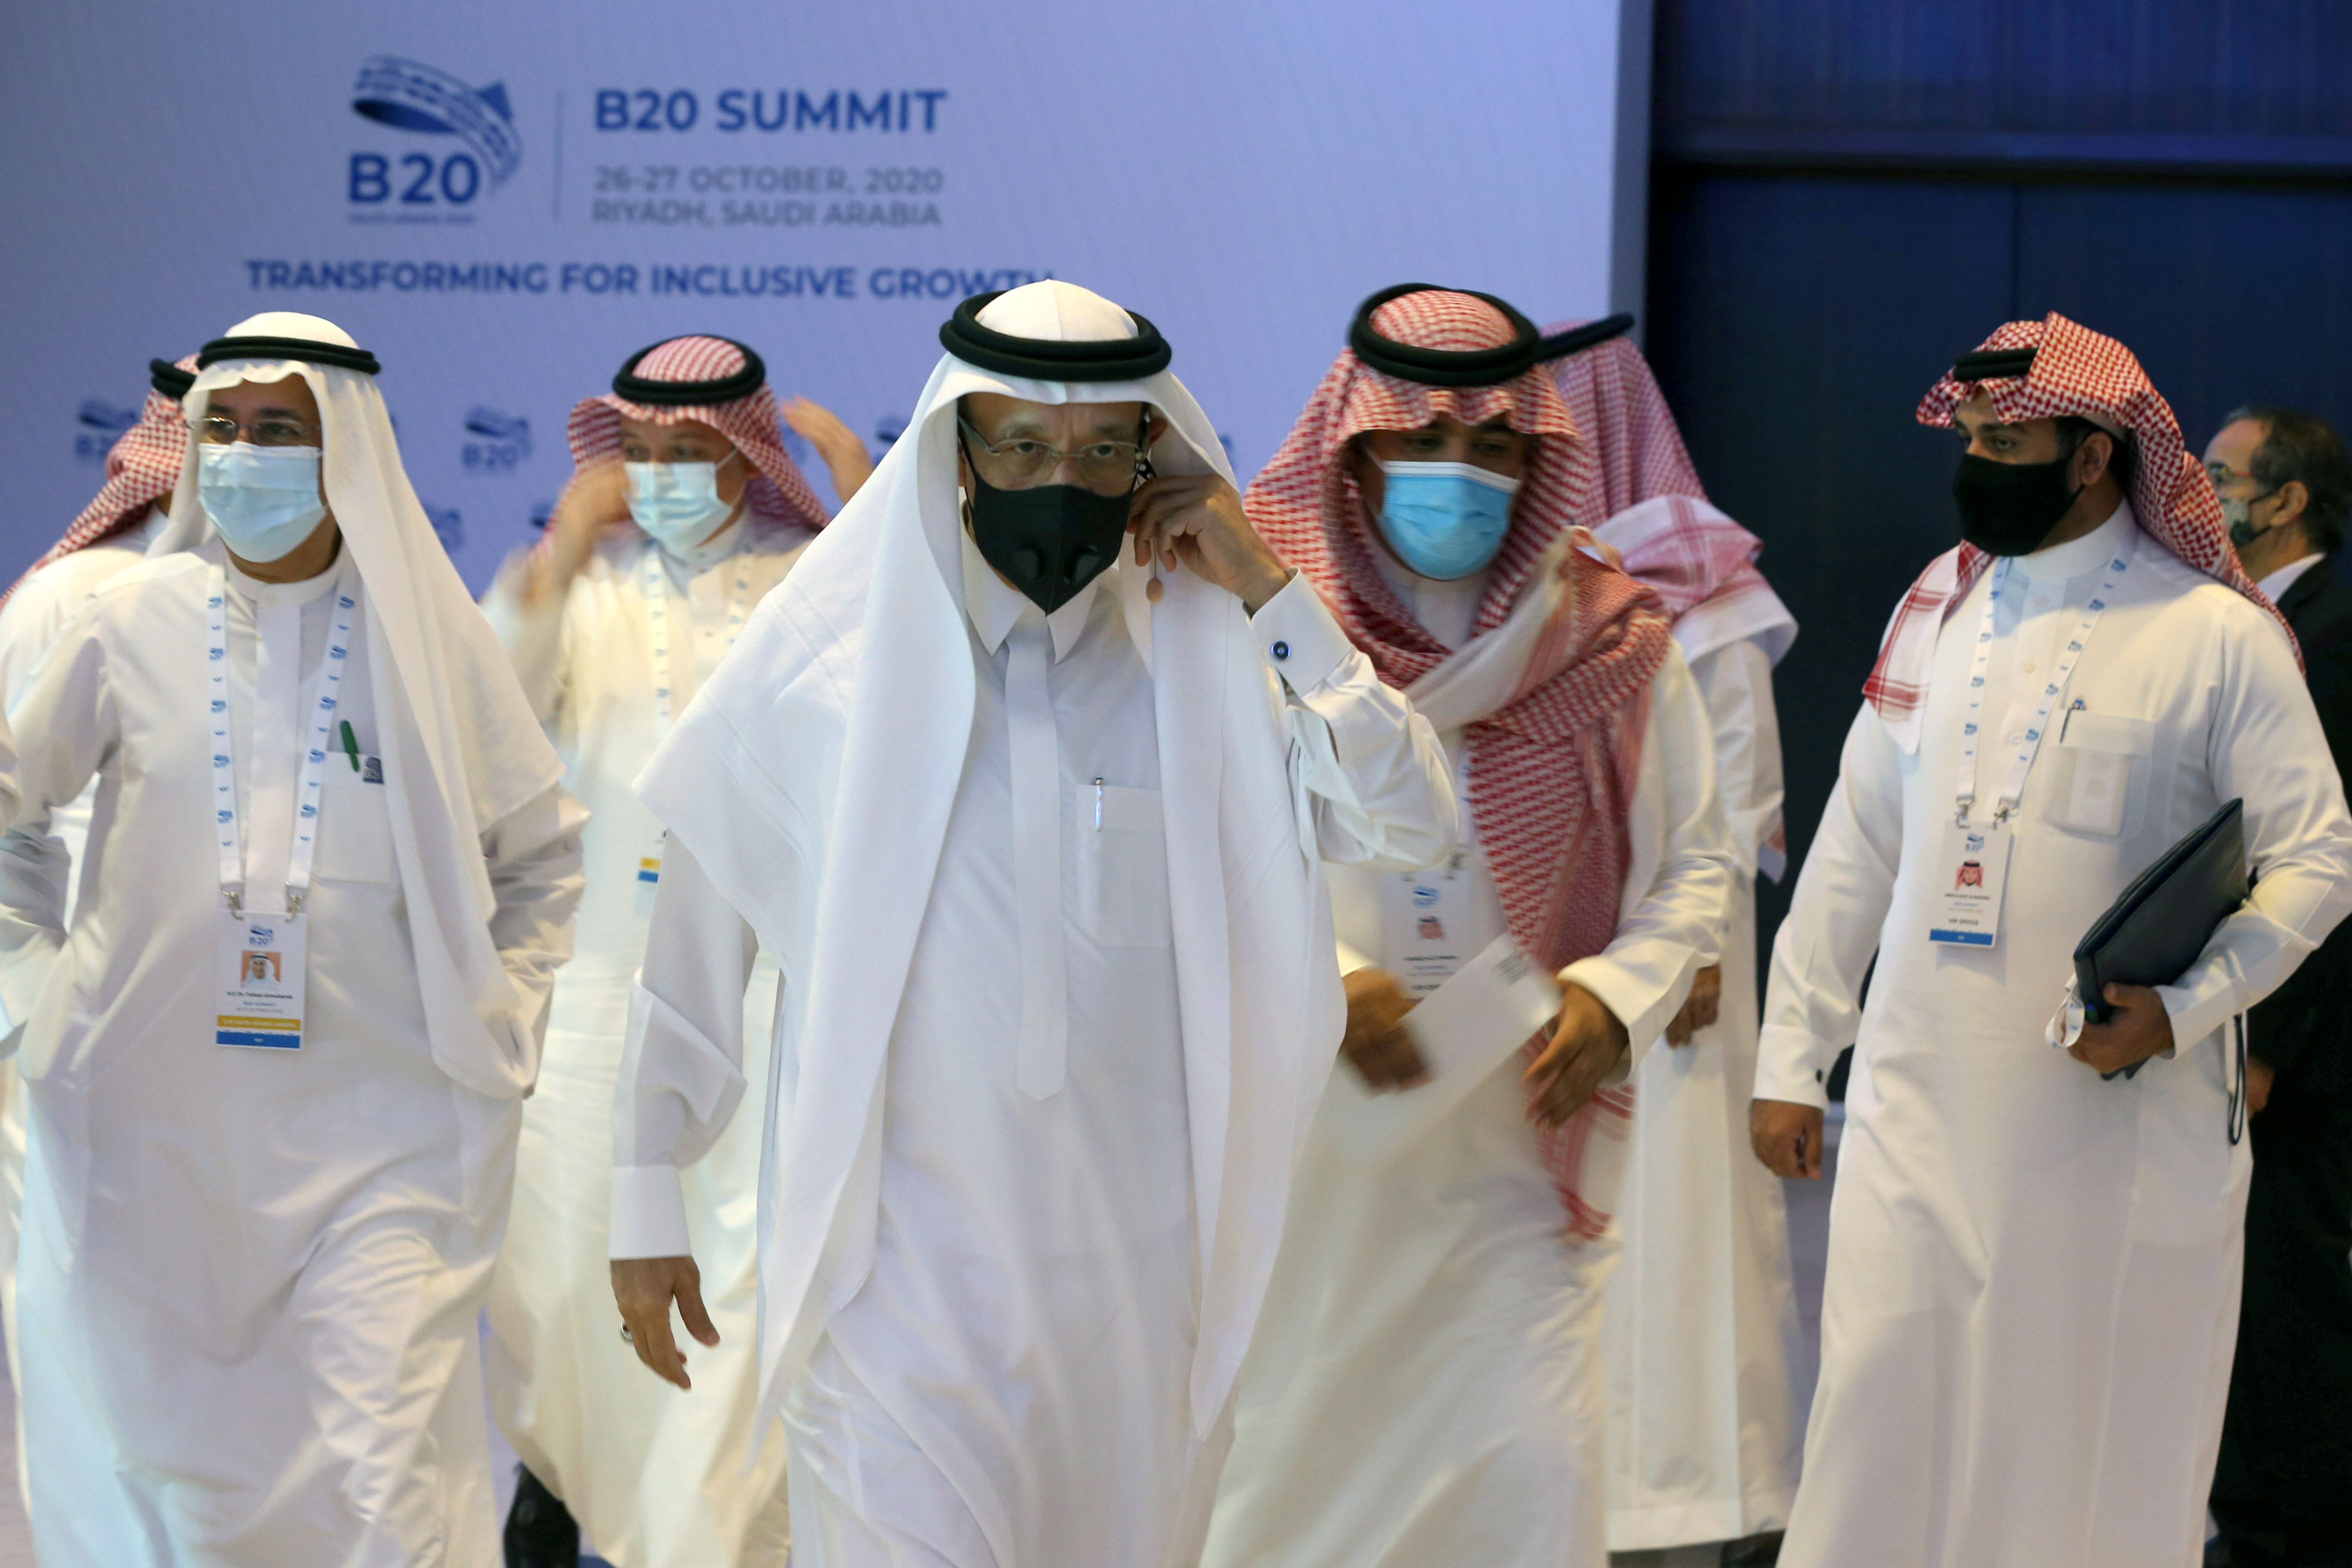 Khalid al-Falih, ministro de Inversiones saudí, en una reunión del B20, en octubre, en Riad (REUTERS/Ahmed Yosri)